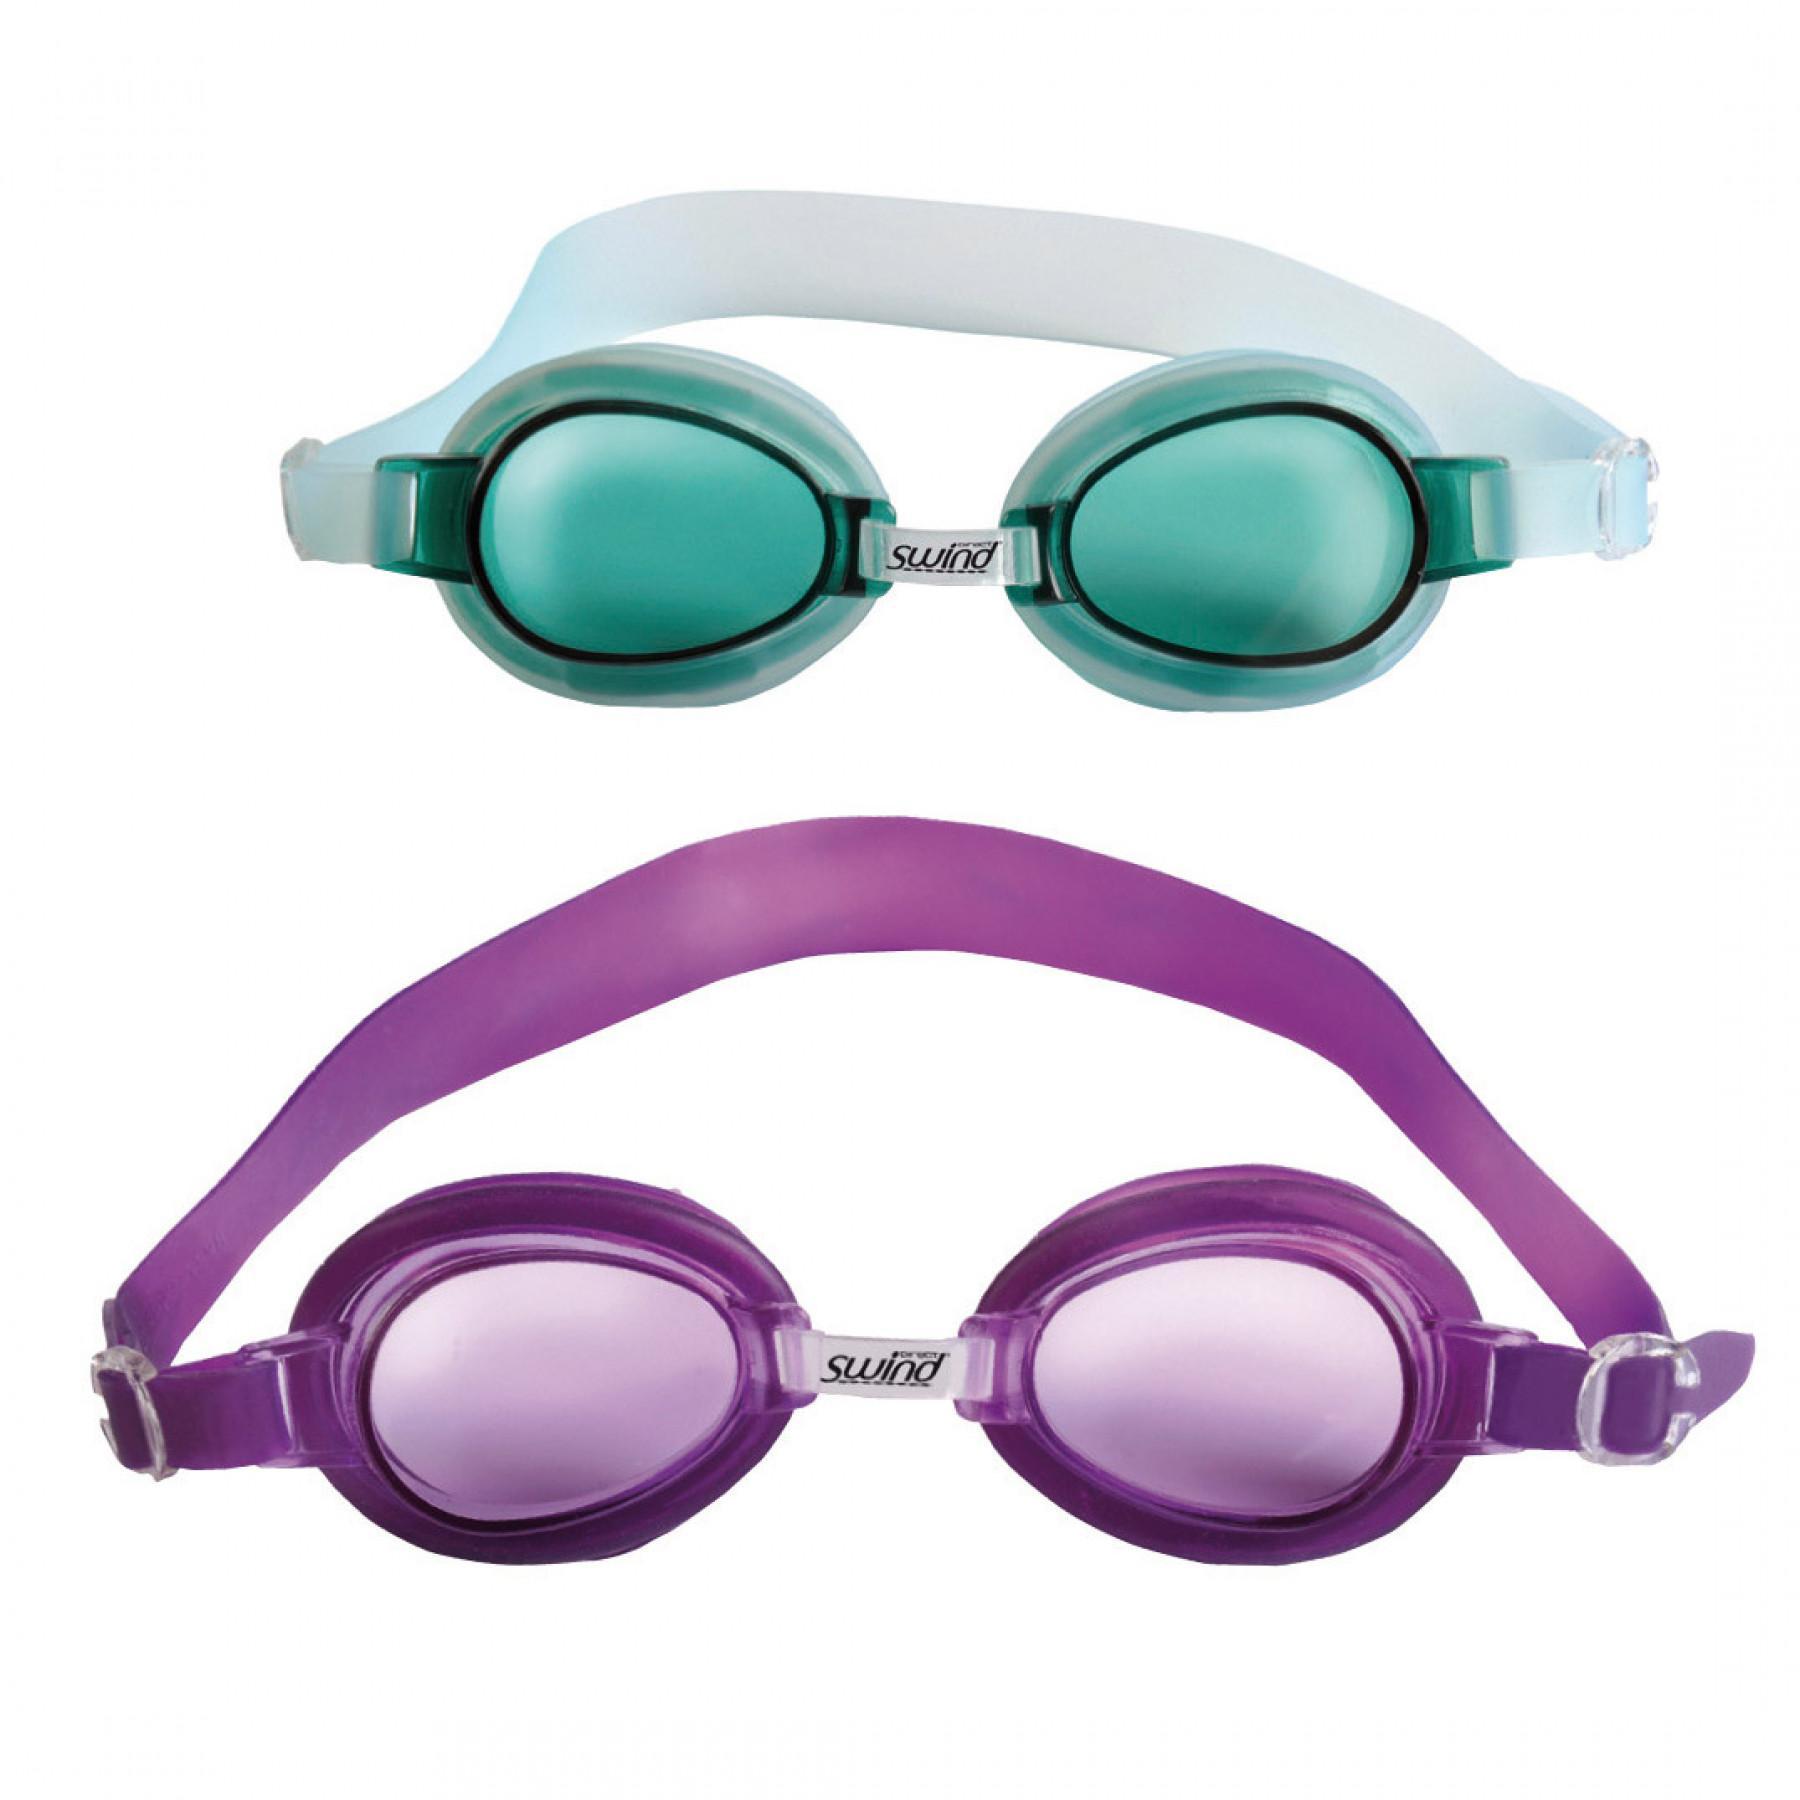 Children's standard glasses Sporti France